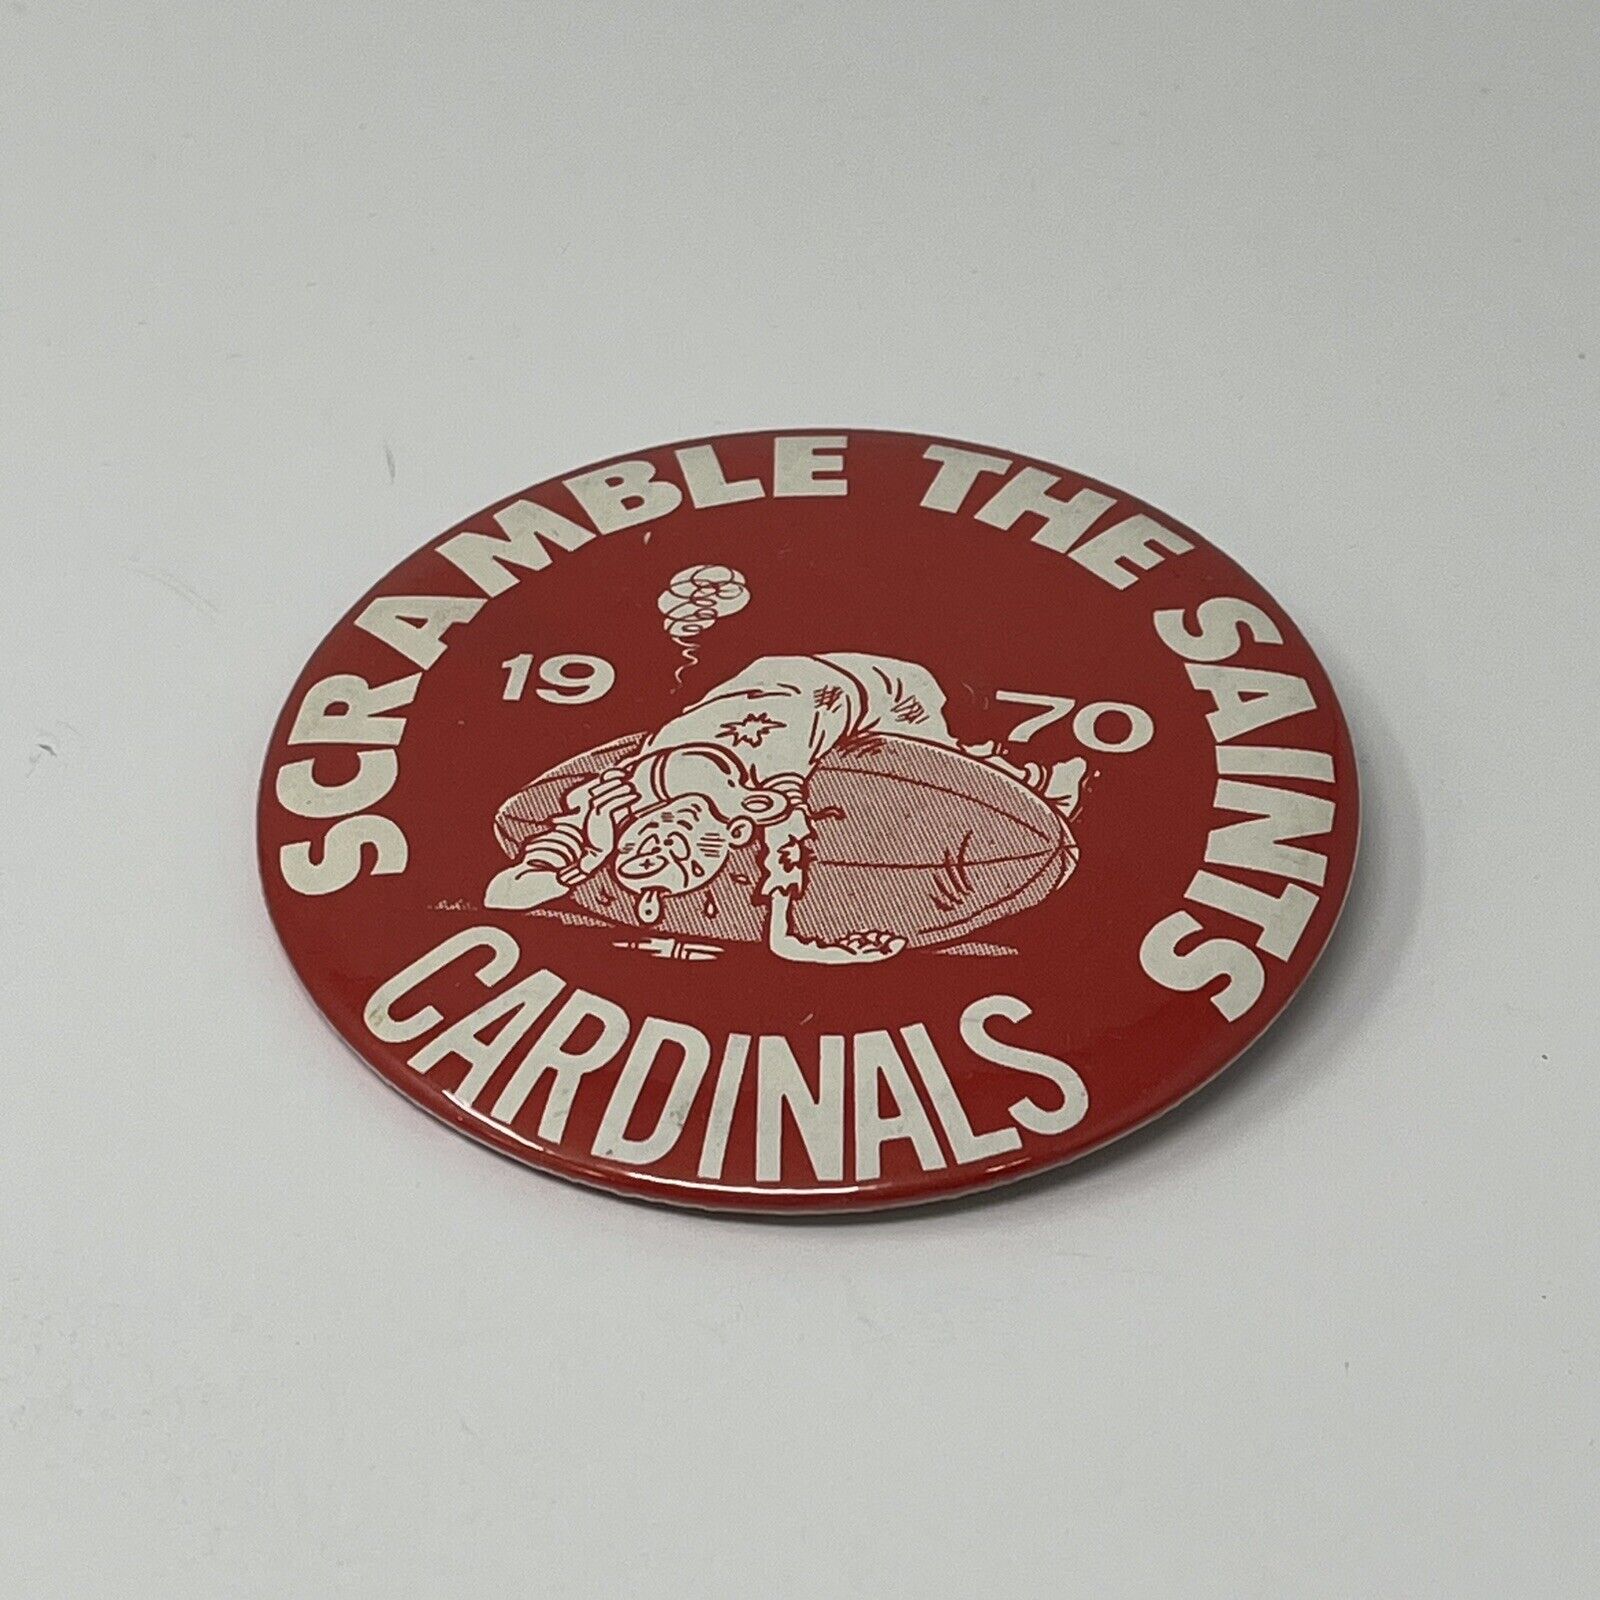 1970 Cardinals Scramble The Saints Harmony Minnesota High School Football Button